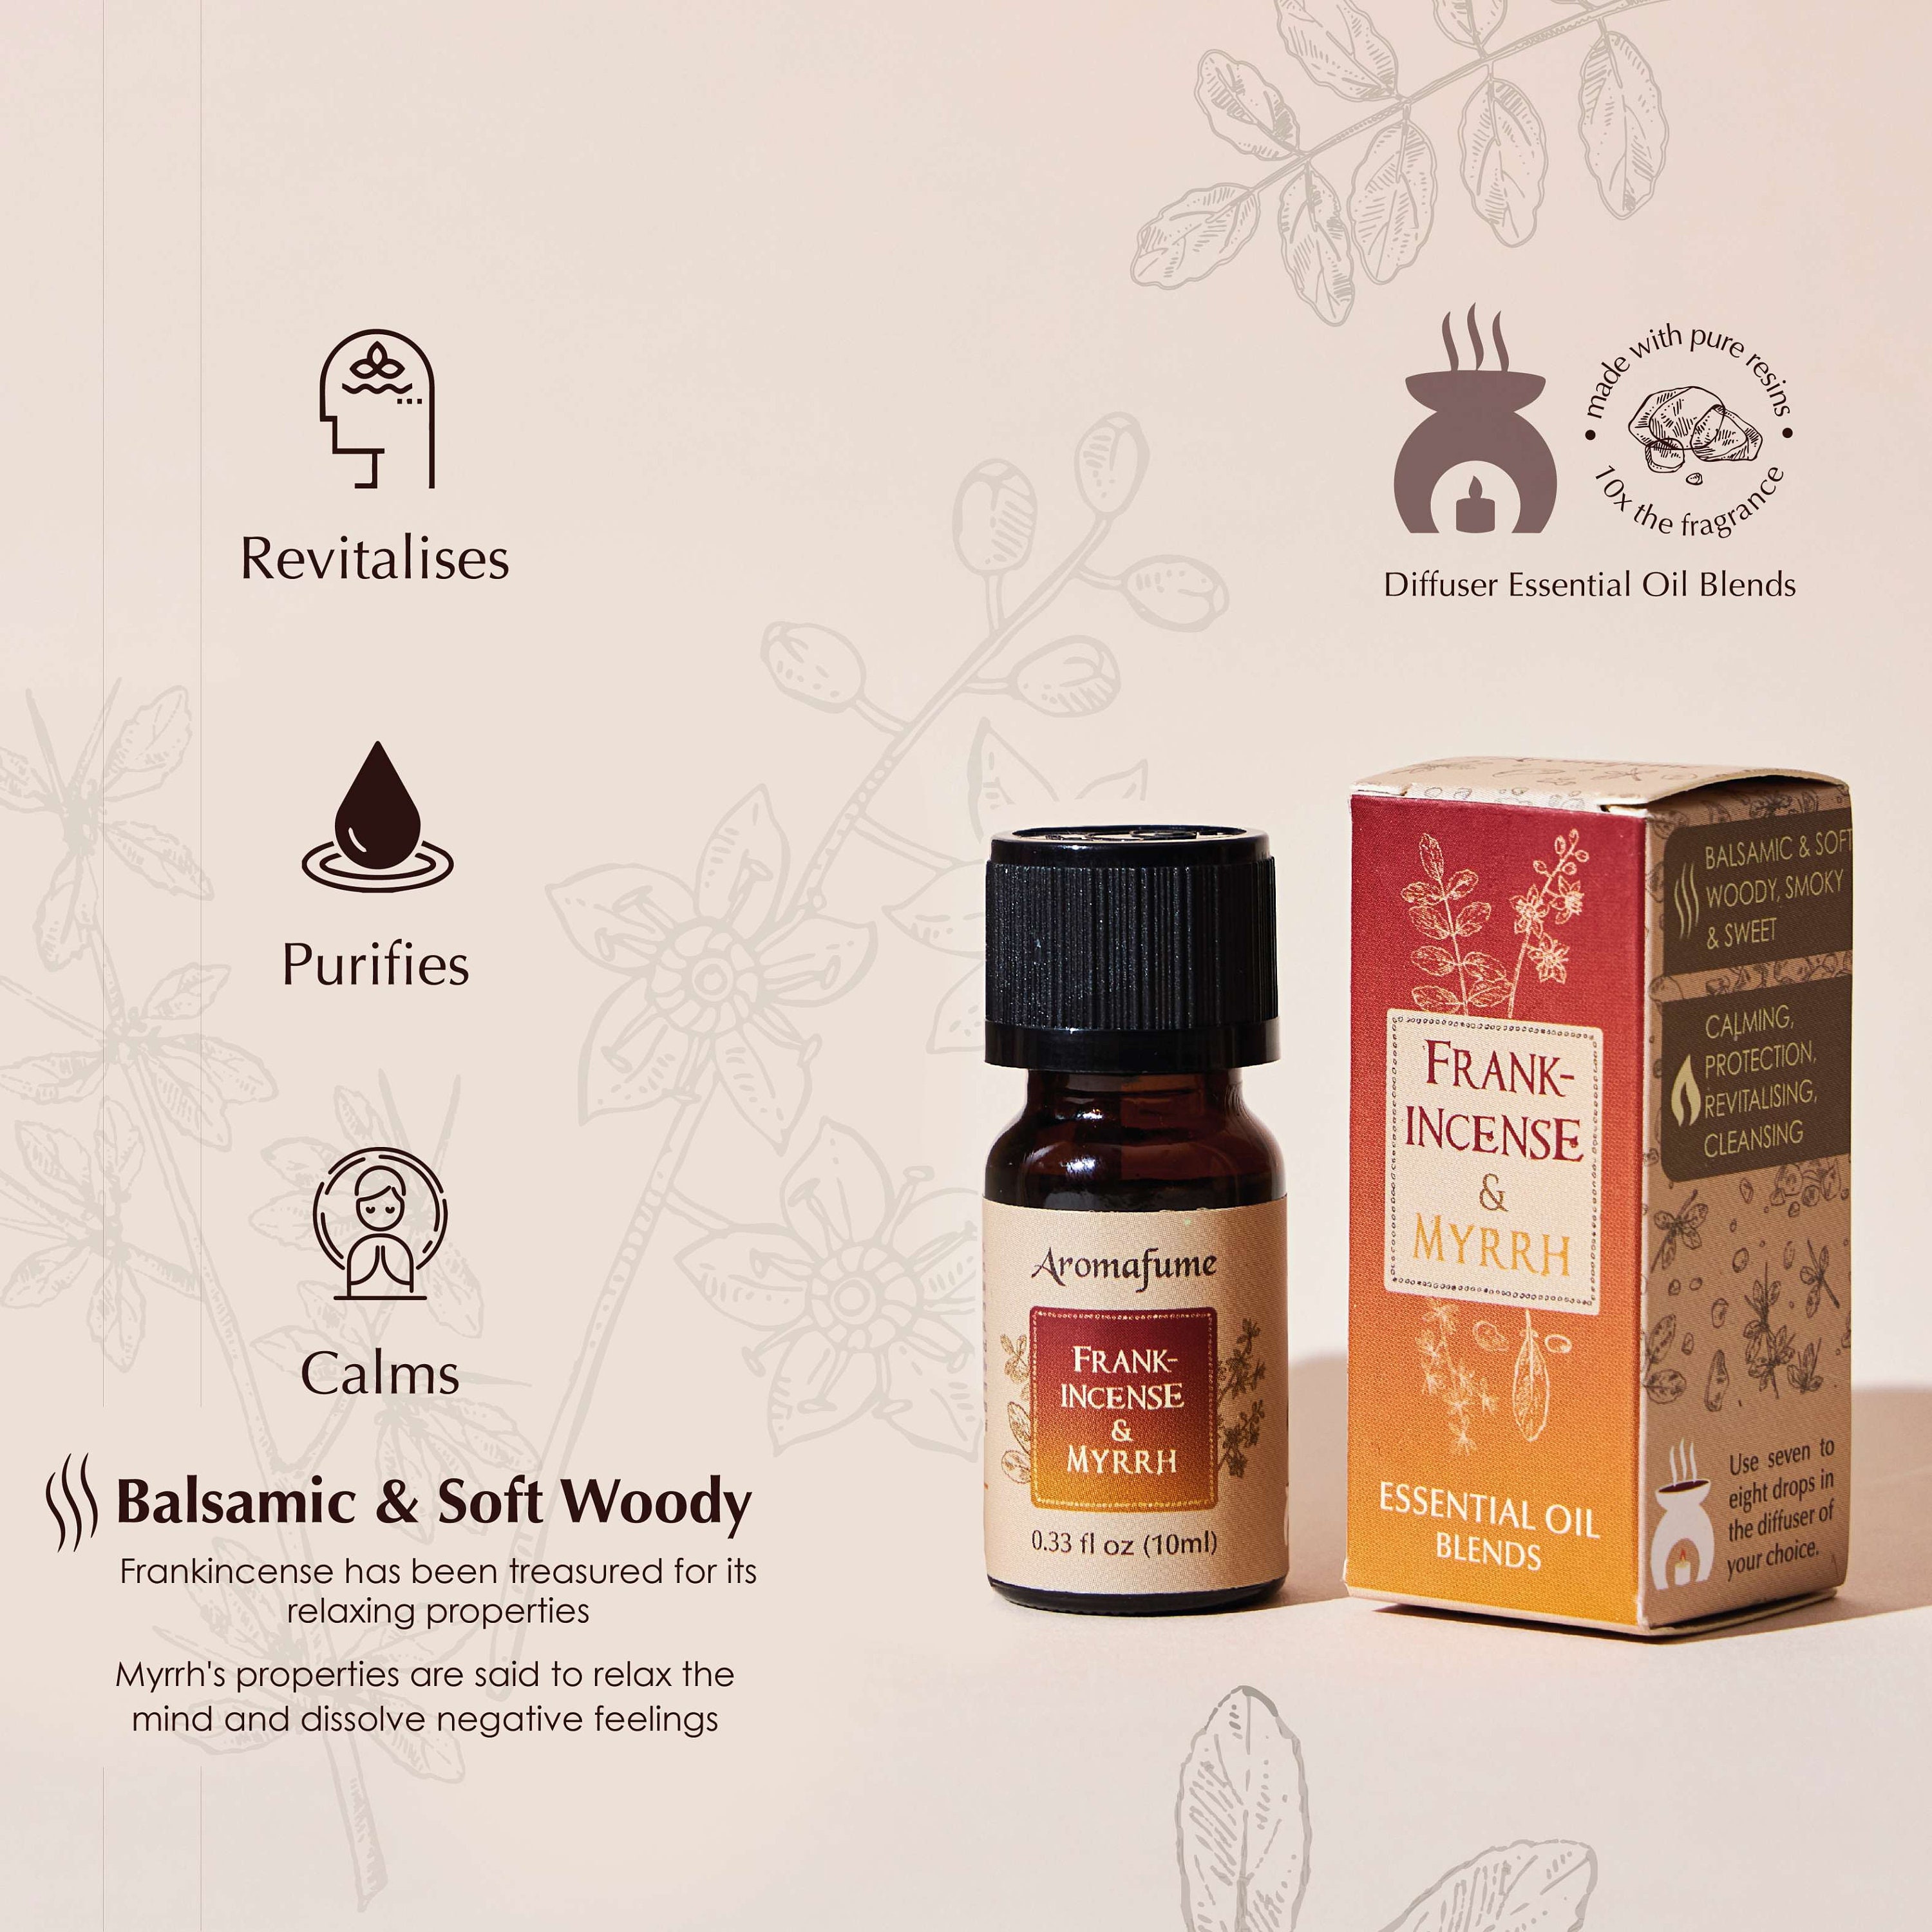 Frankincense and Myrrh - 100% Pure Essential Oil Blend of Carterii and  Myrrh